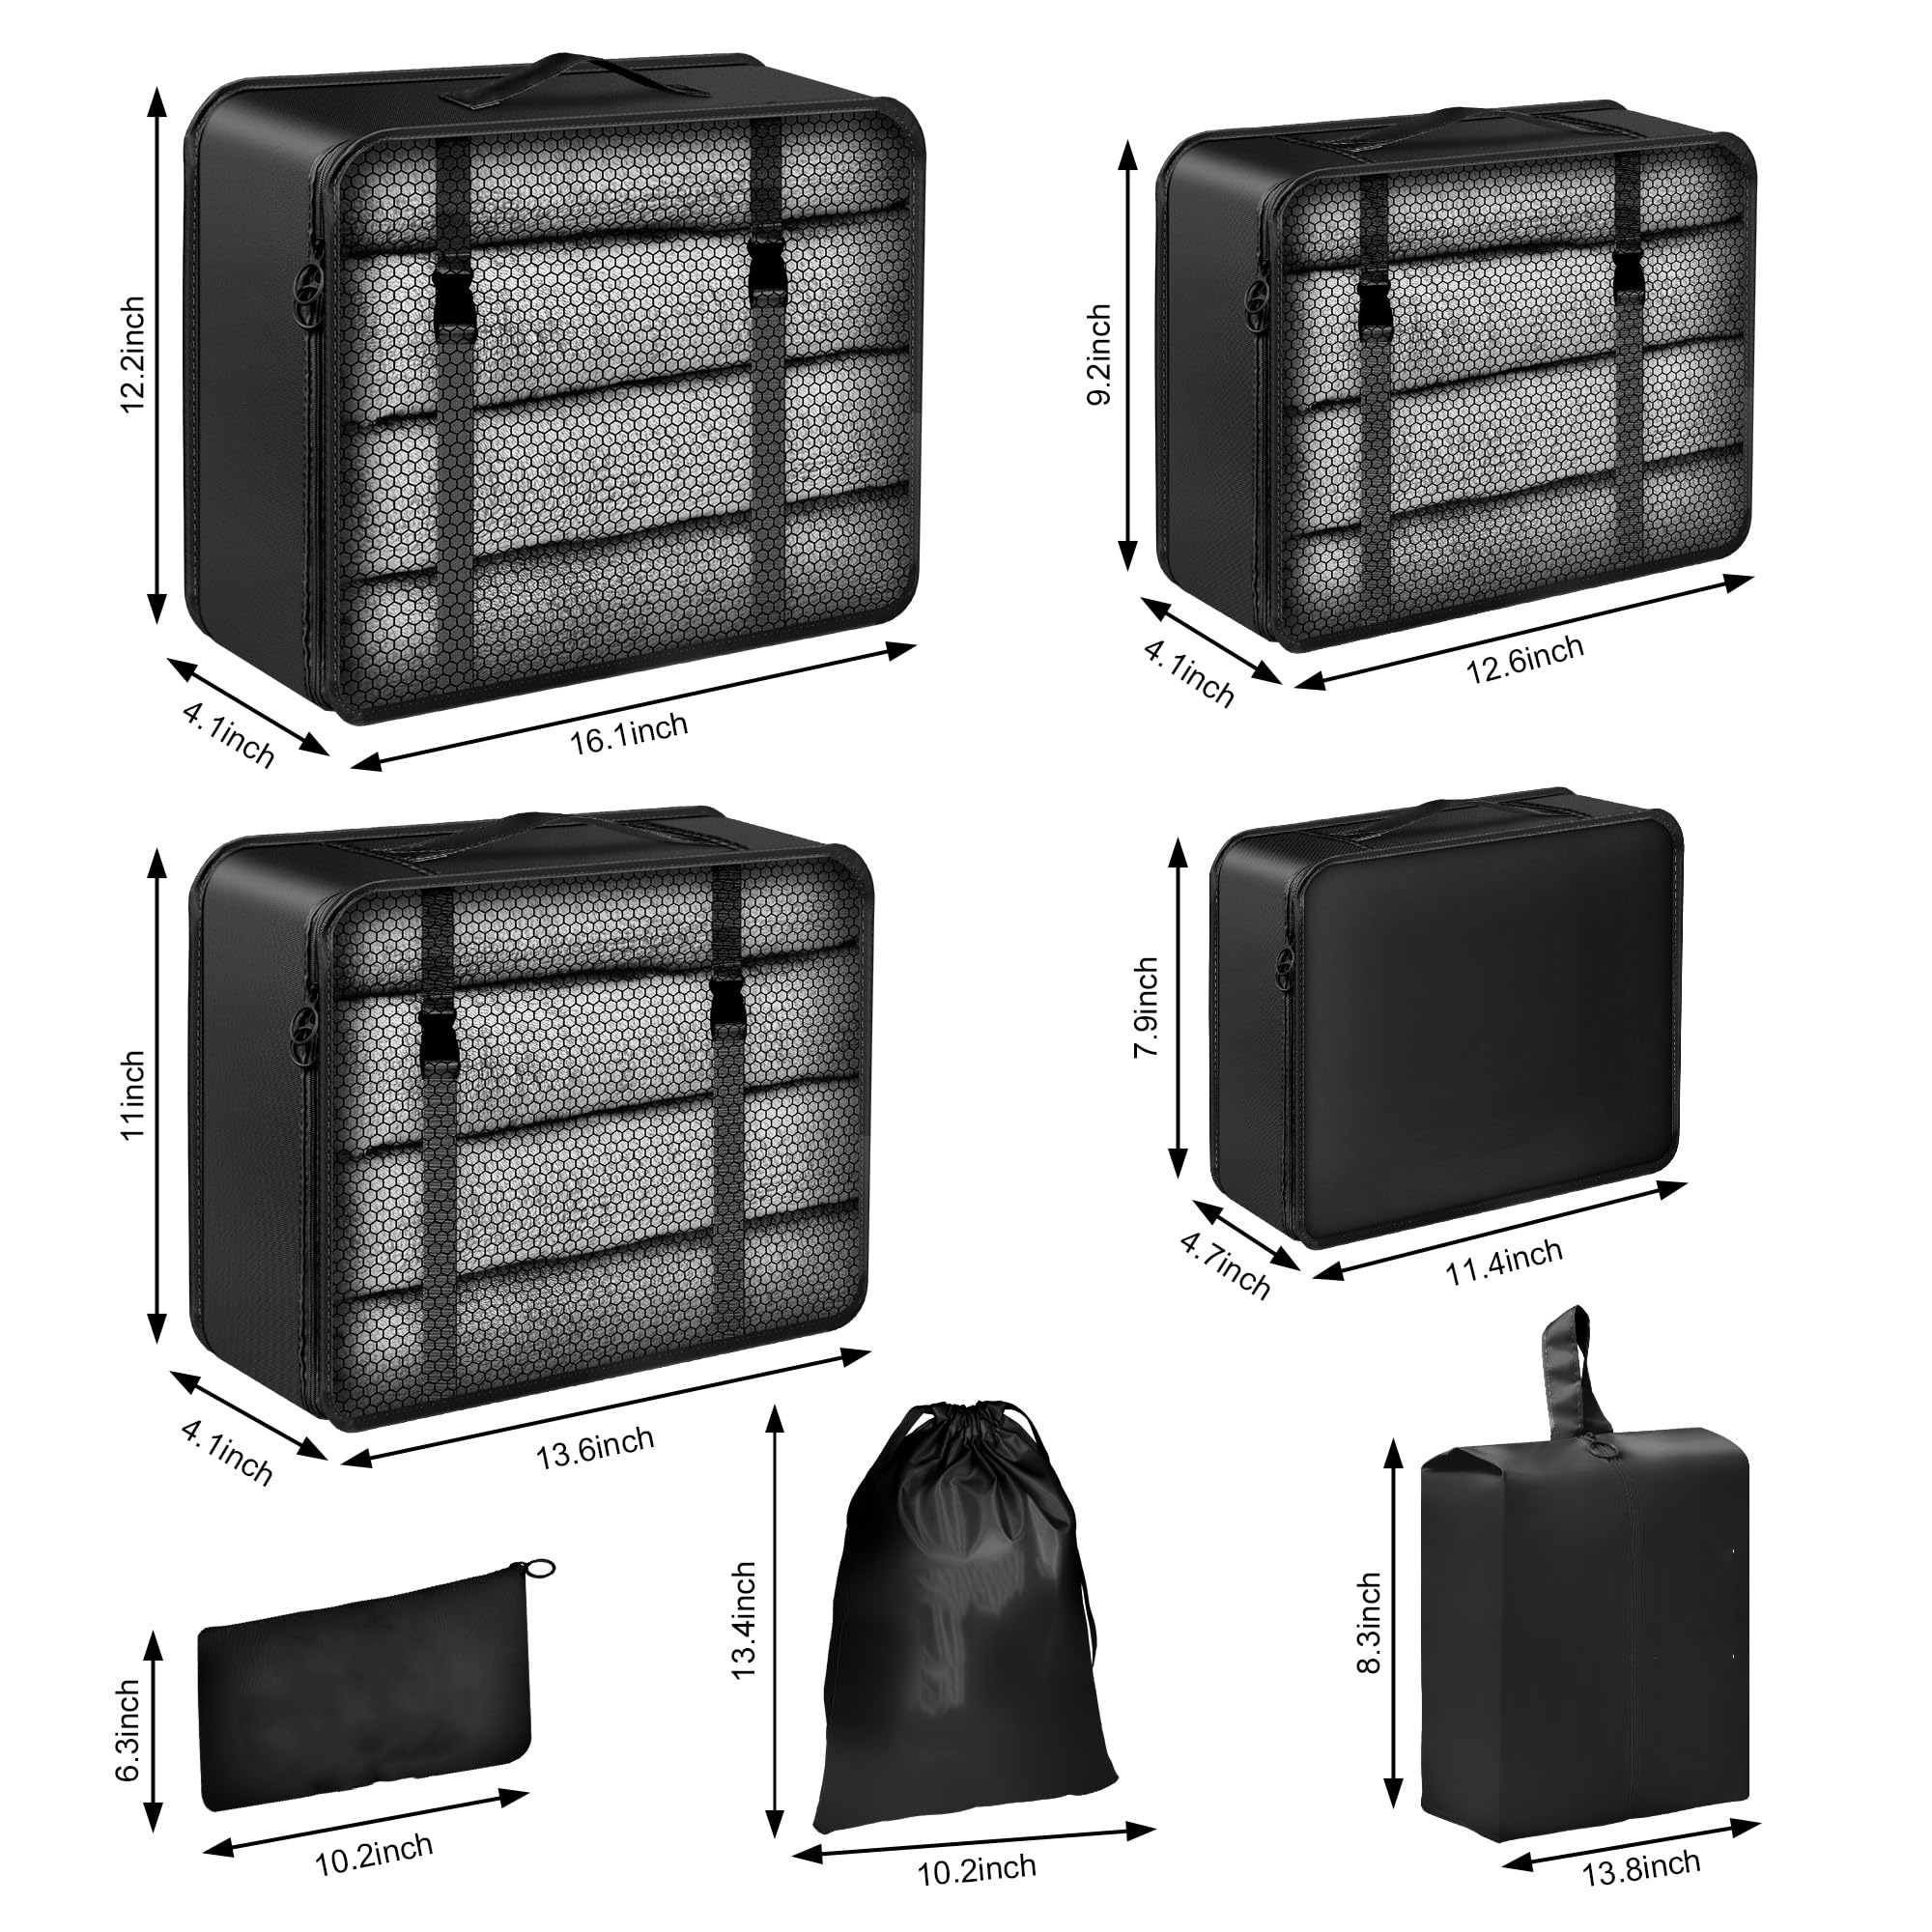 7-Piece Travel Packing Cubes Set Product Details